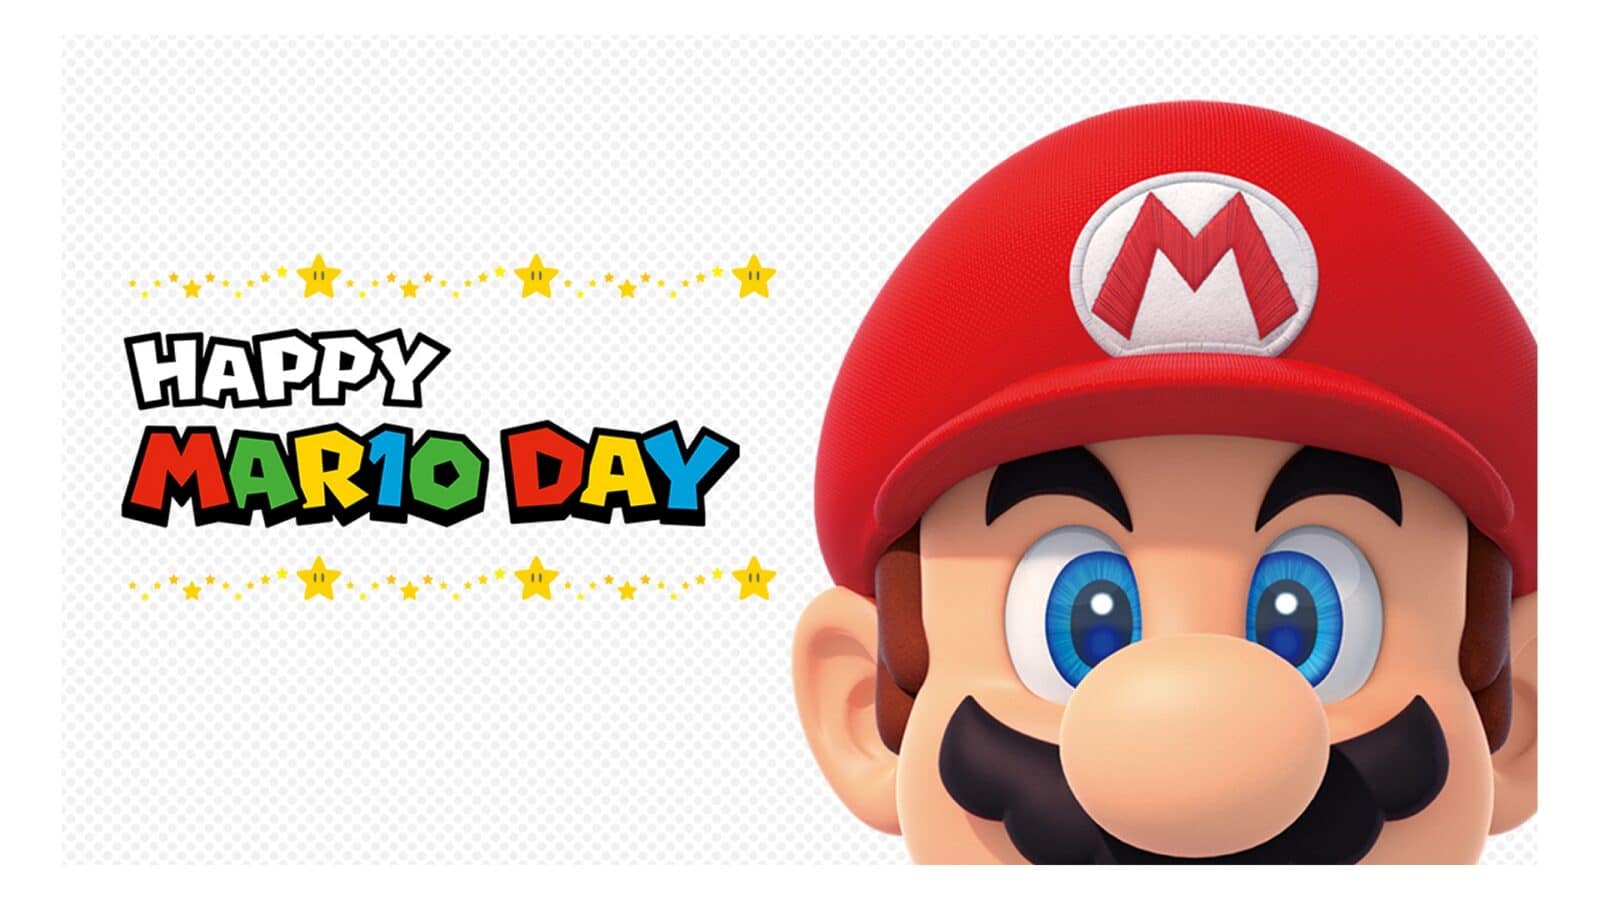 Nintendo MAR10 DAY